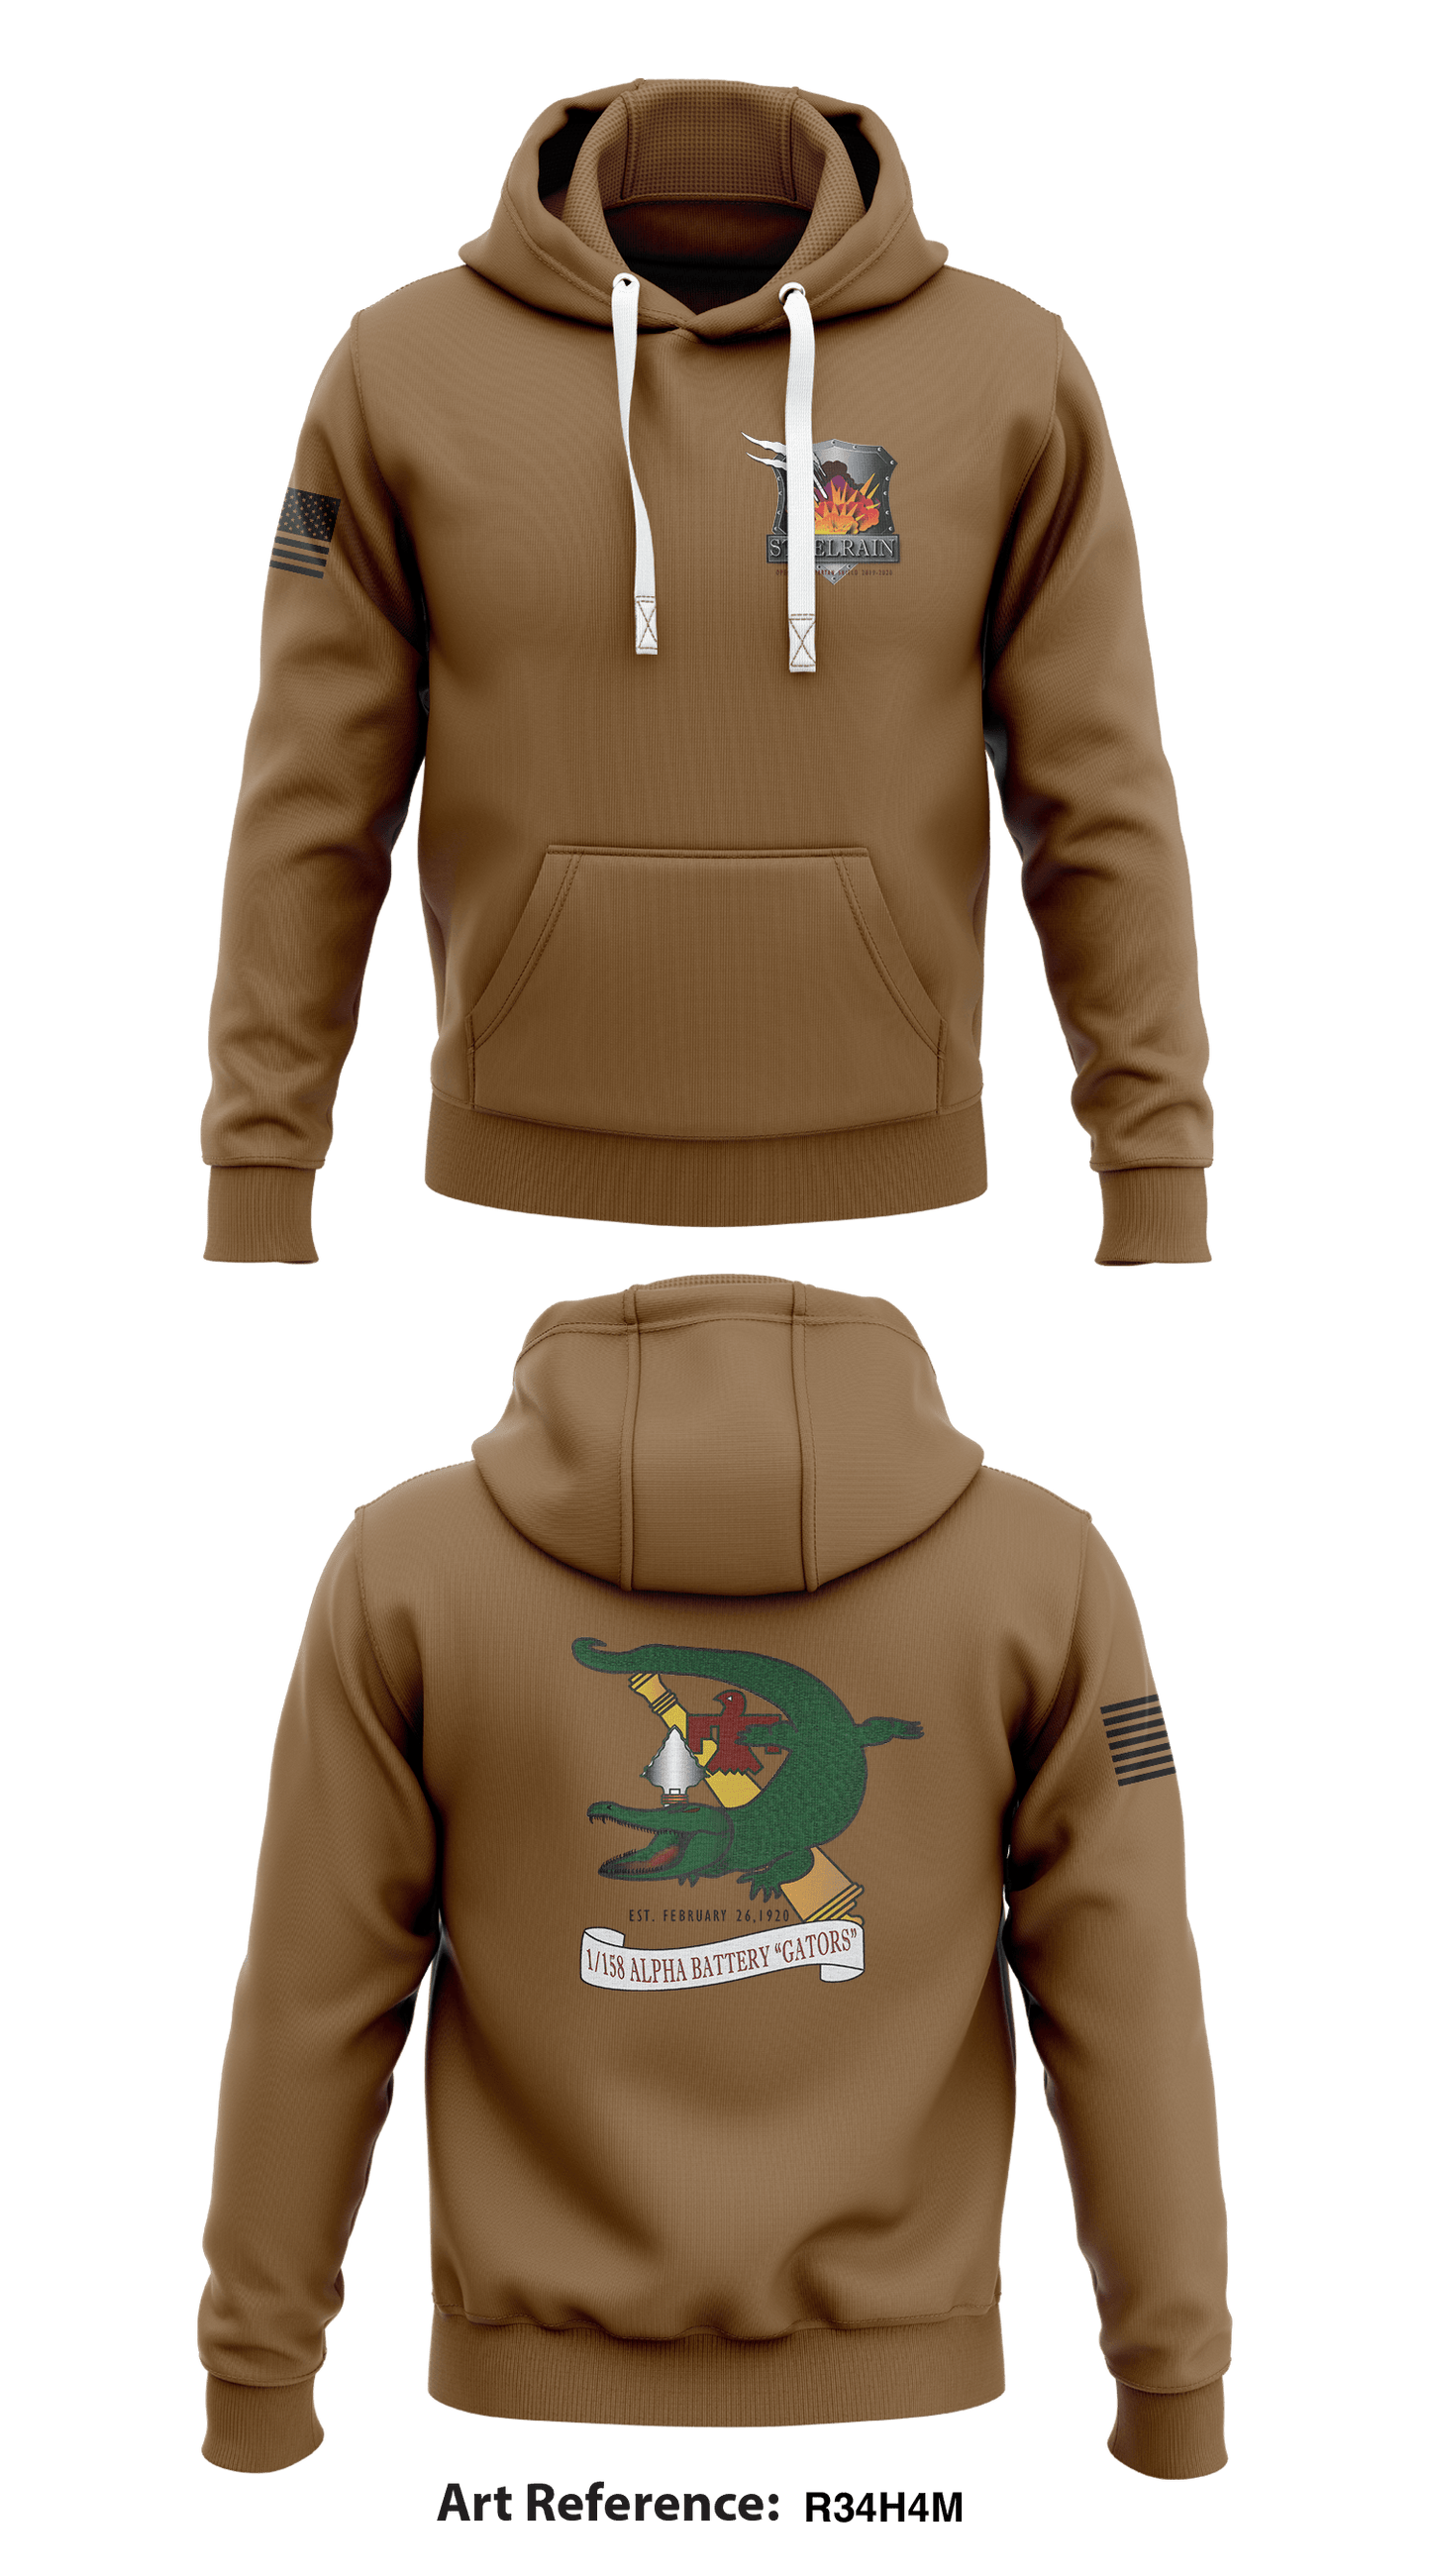 A BTRY 1-158 Store 1 Core Men's Hooded Performance Sweatshirt - R34H4m